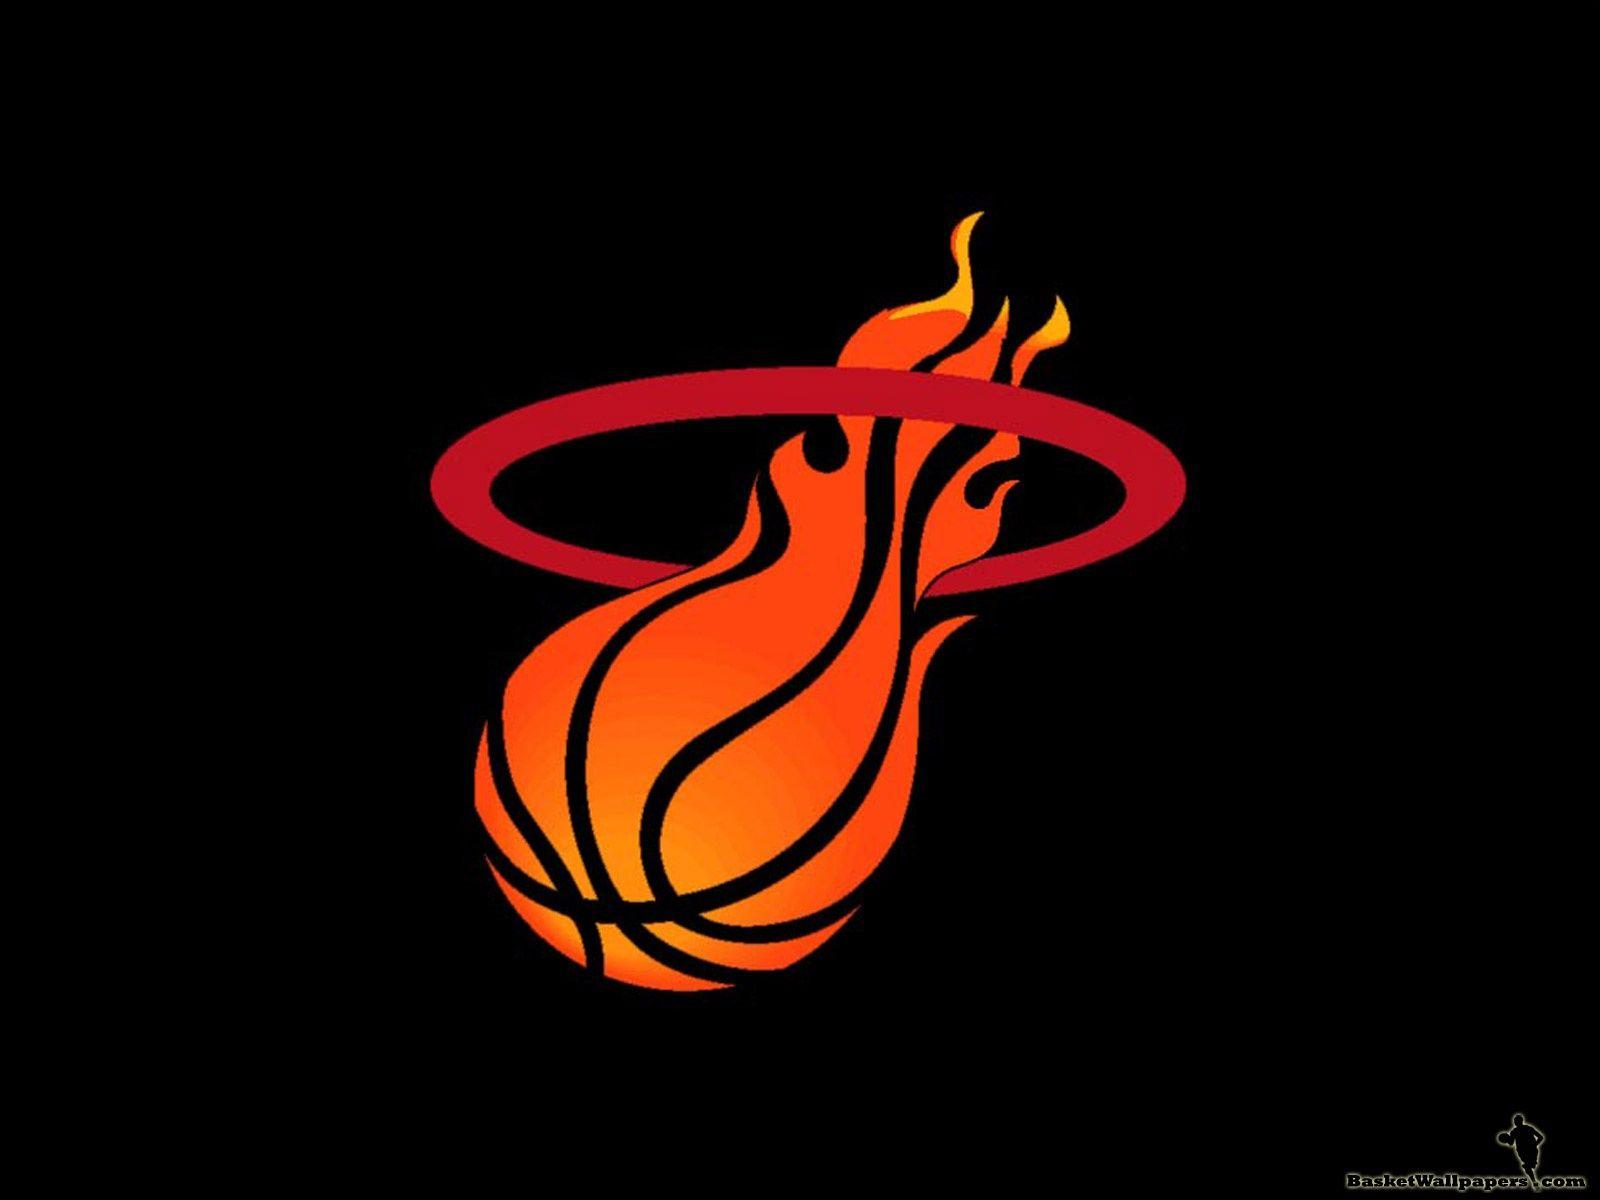 a picture of the miami heat logo Wallpaper HD Image 8279